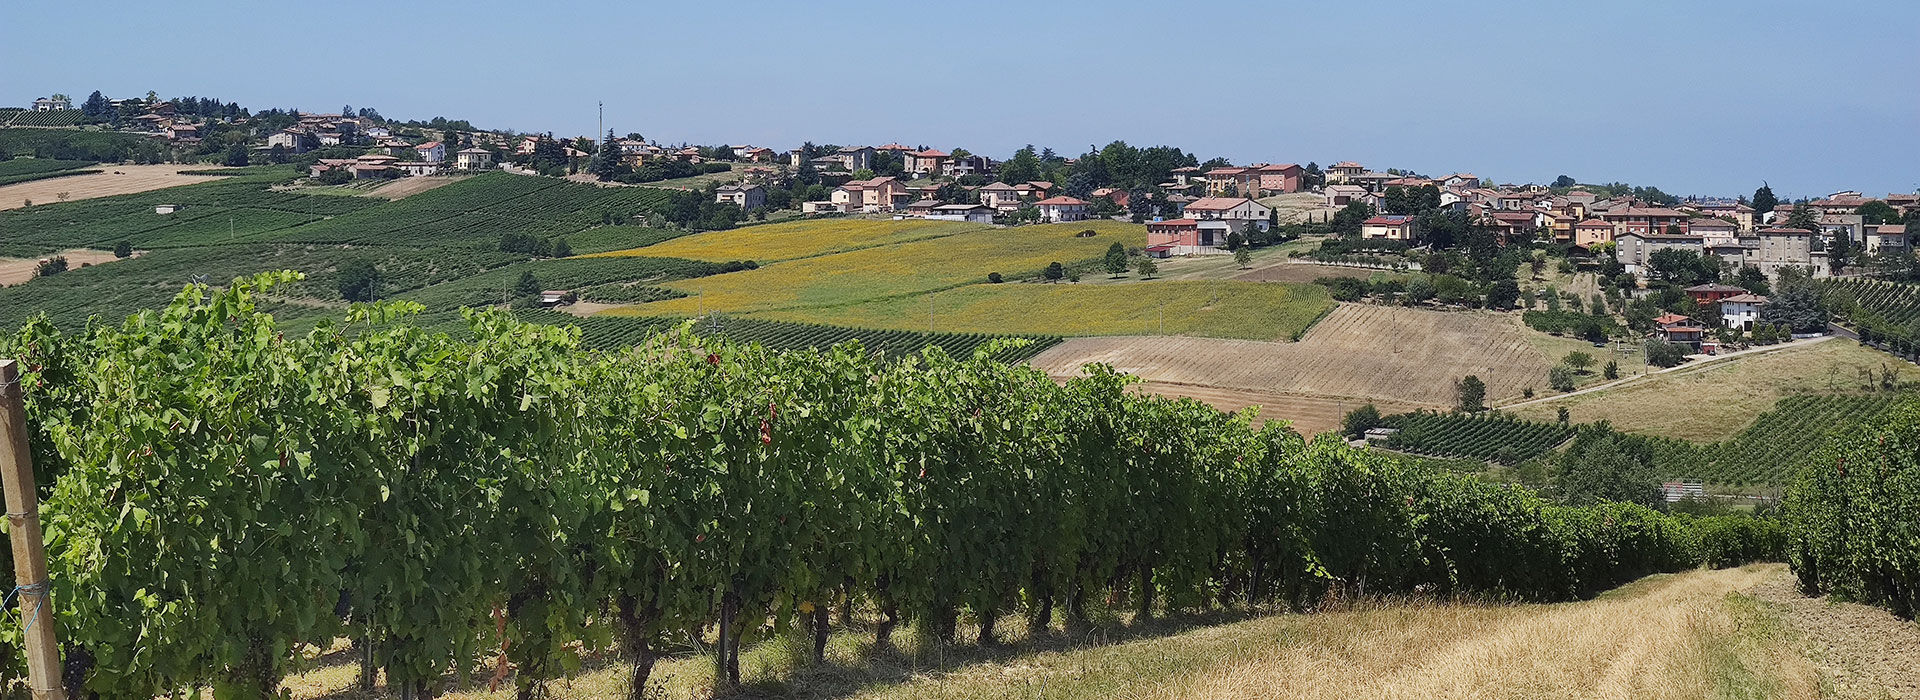 Farmhouse and Winery in Italy | Bonarda Wine Italy Frizzante |  Wineries in Emilia Romagna Italy